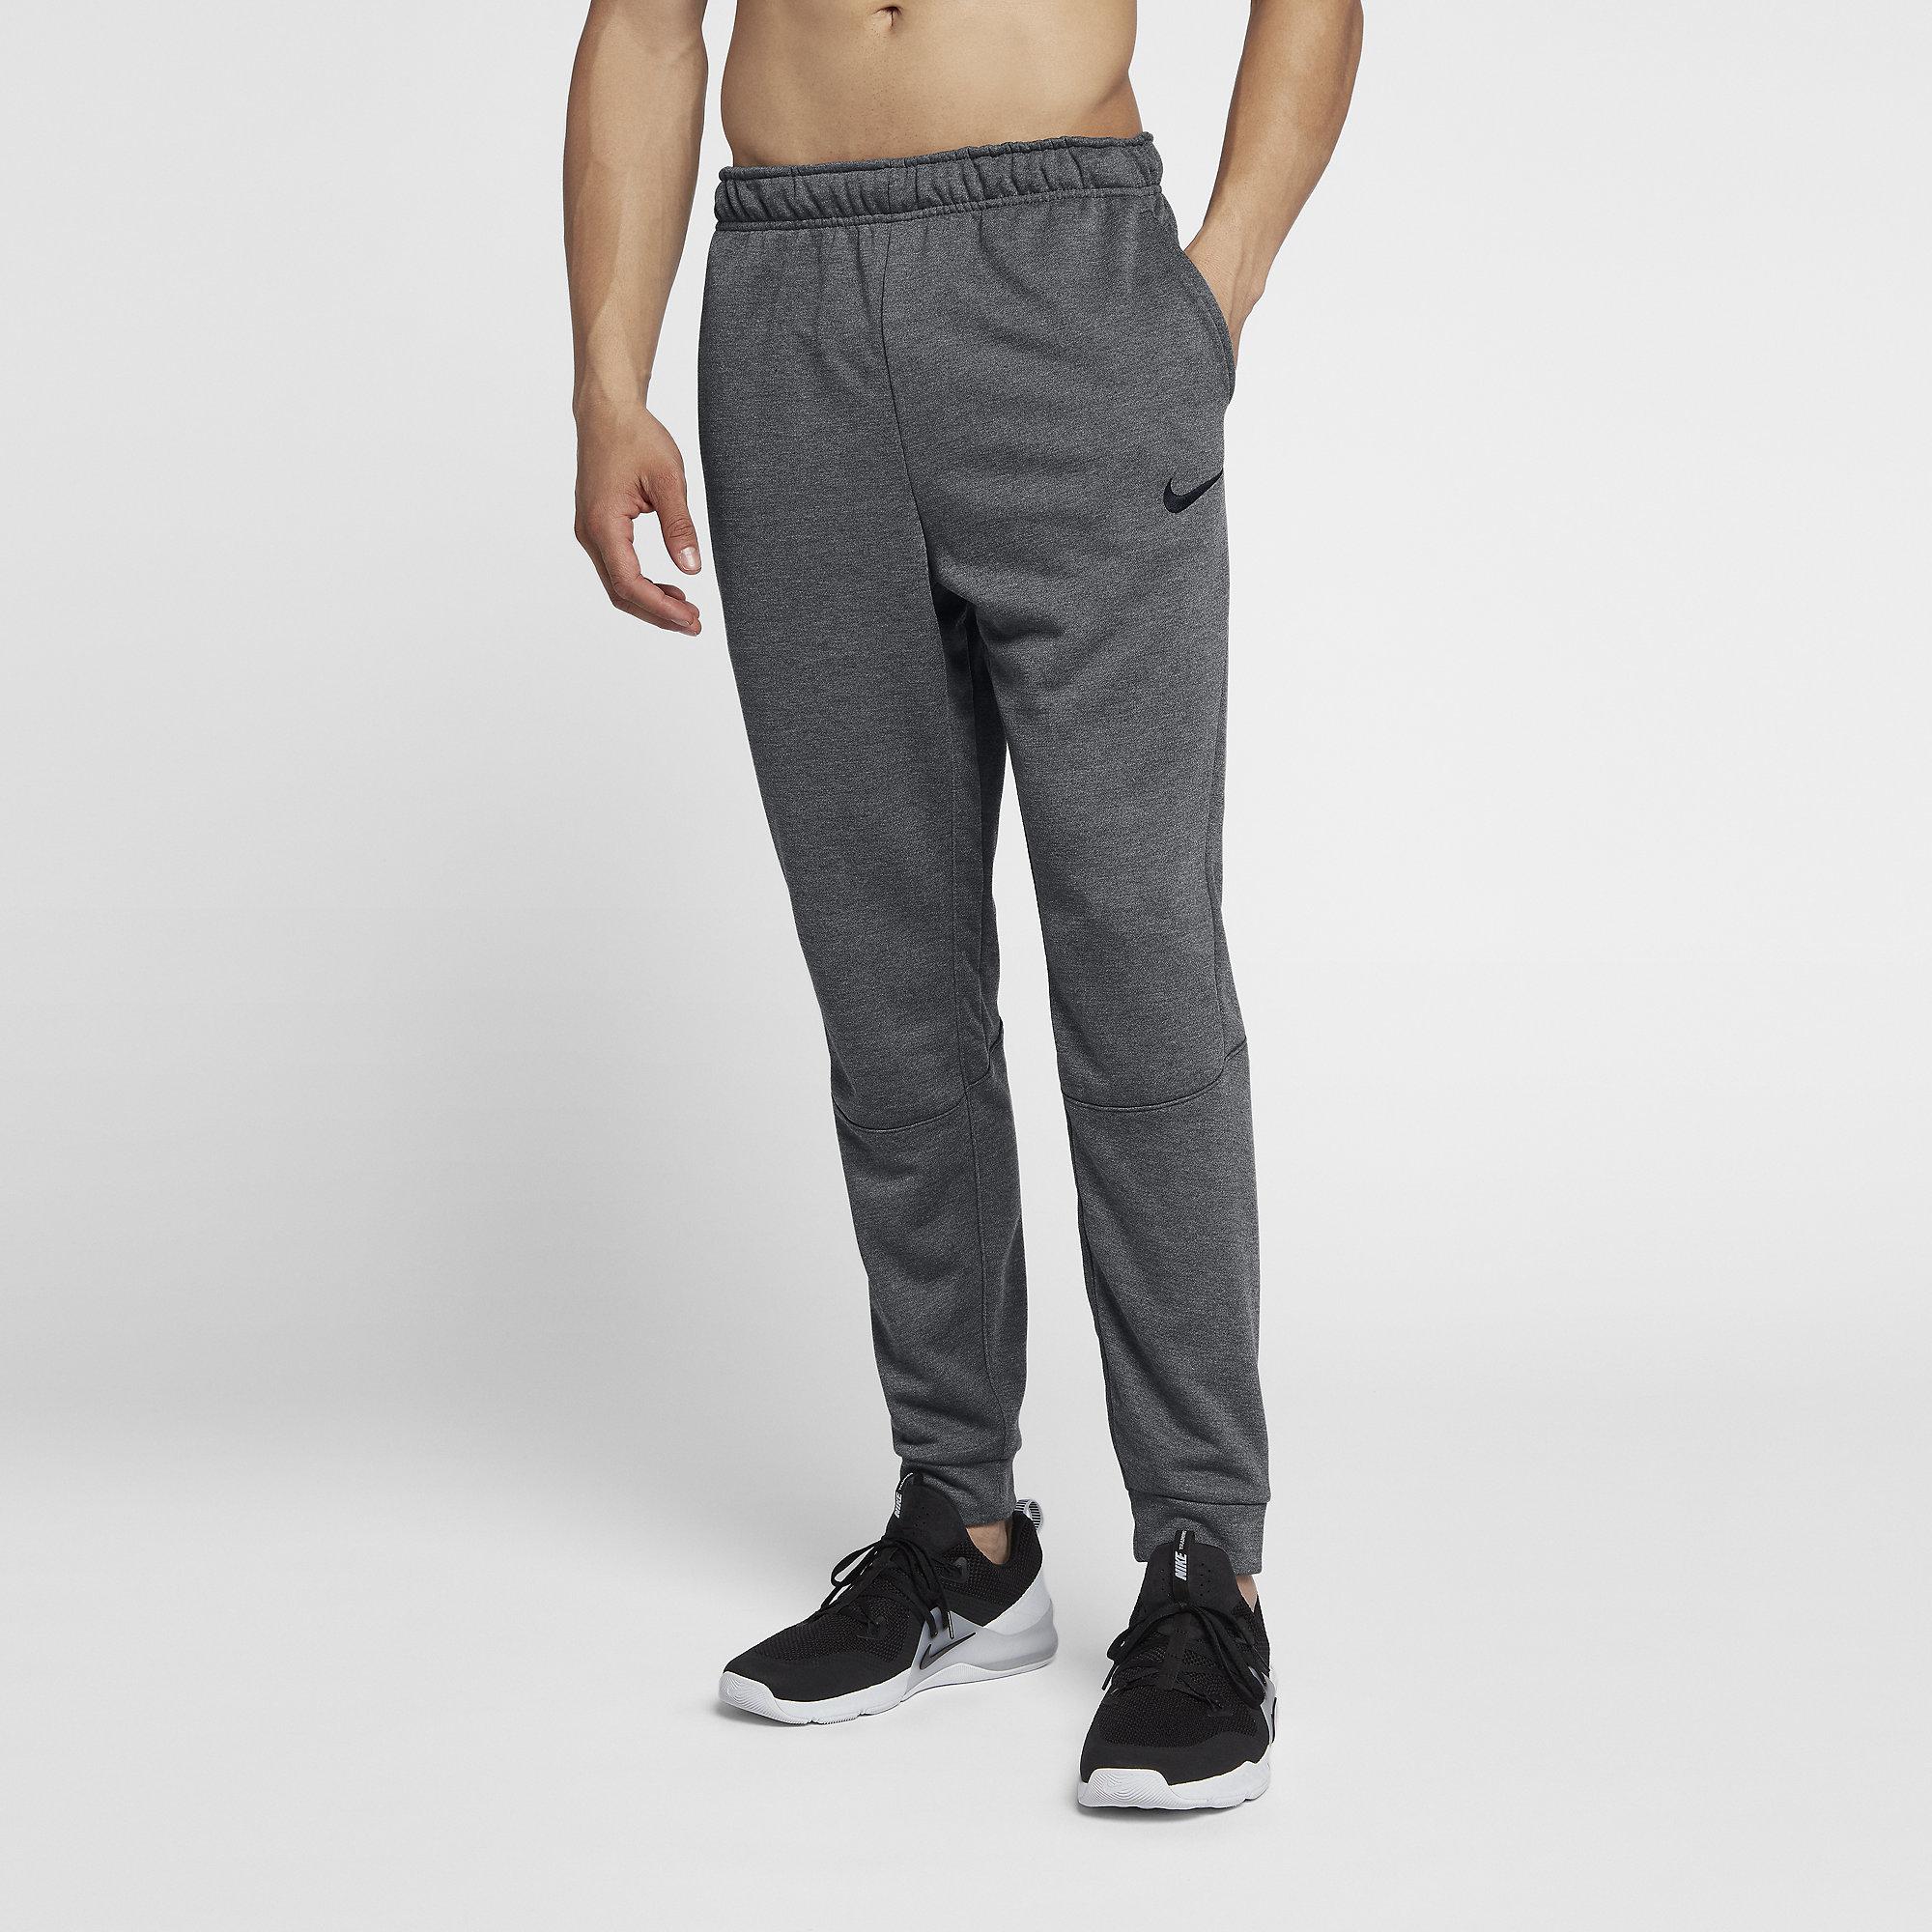 Nike Mens Training Pants - Charcoal Heather/Black - Tennisnuts.com